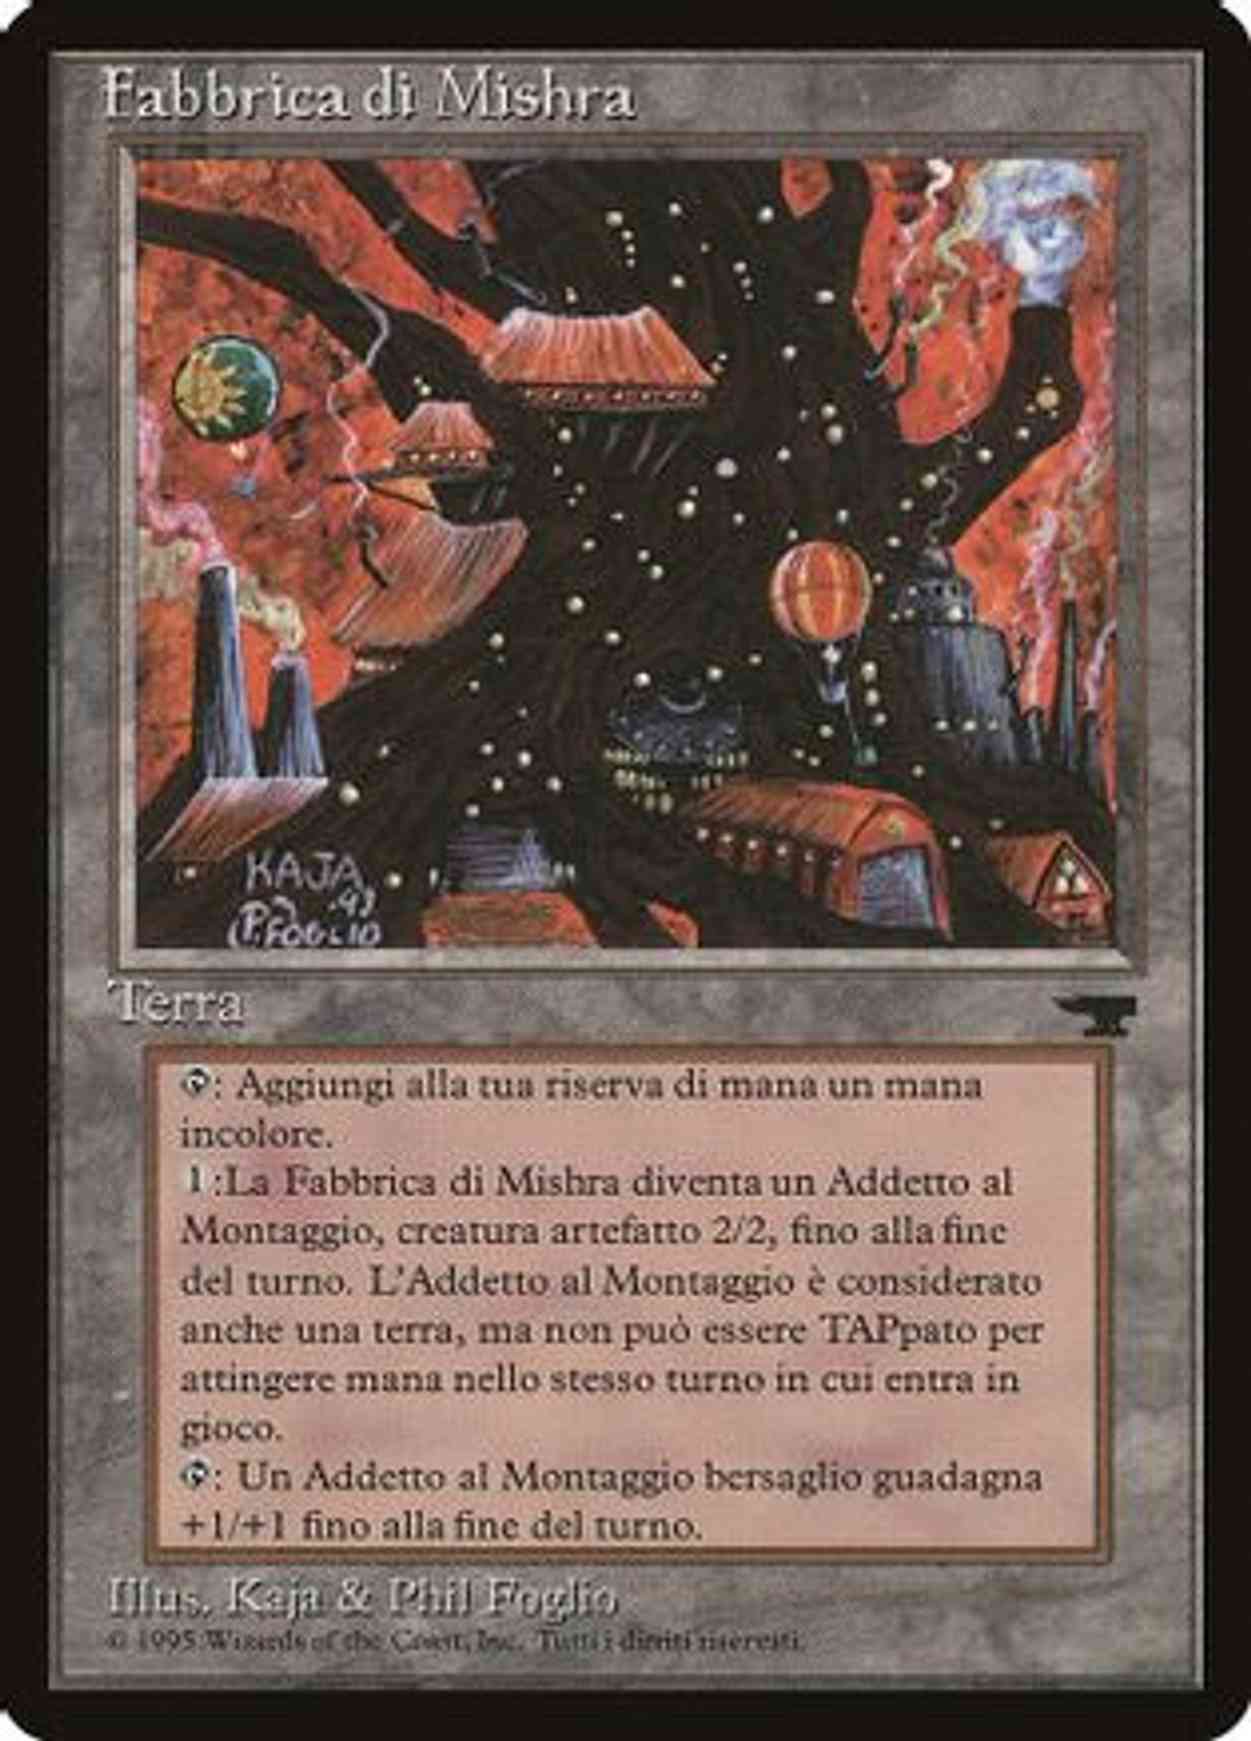 Mishra's Factory (Italian) - "Fabbrica di Mishra" magic card front